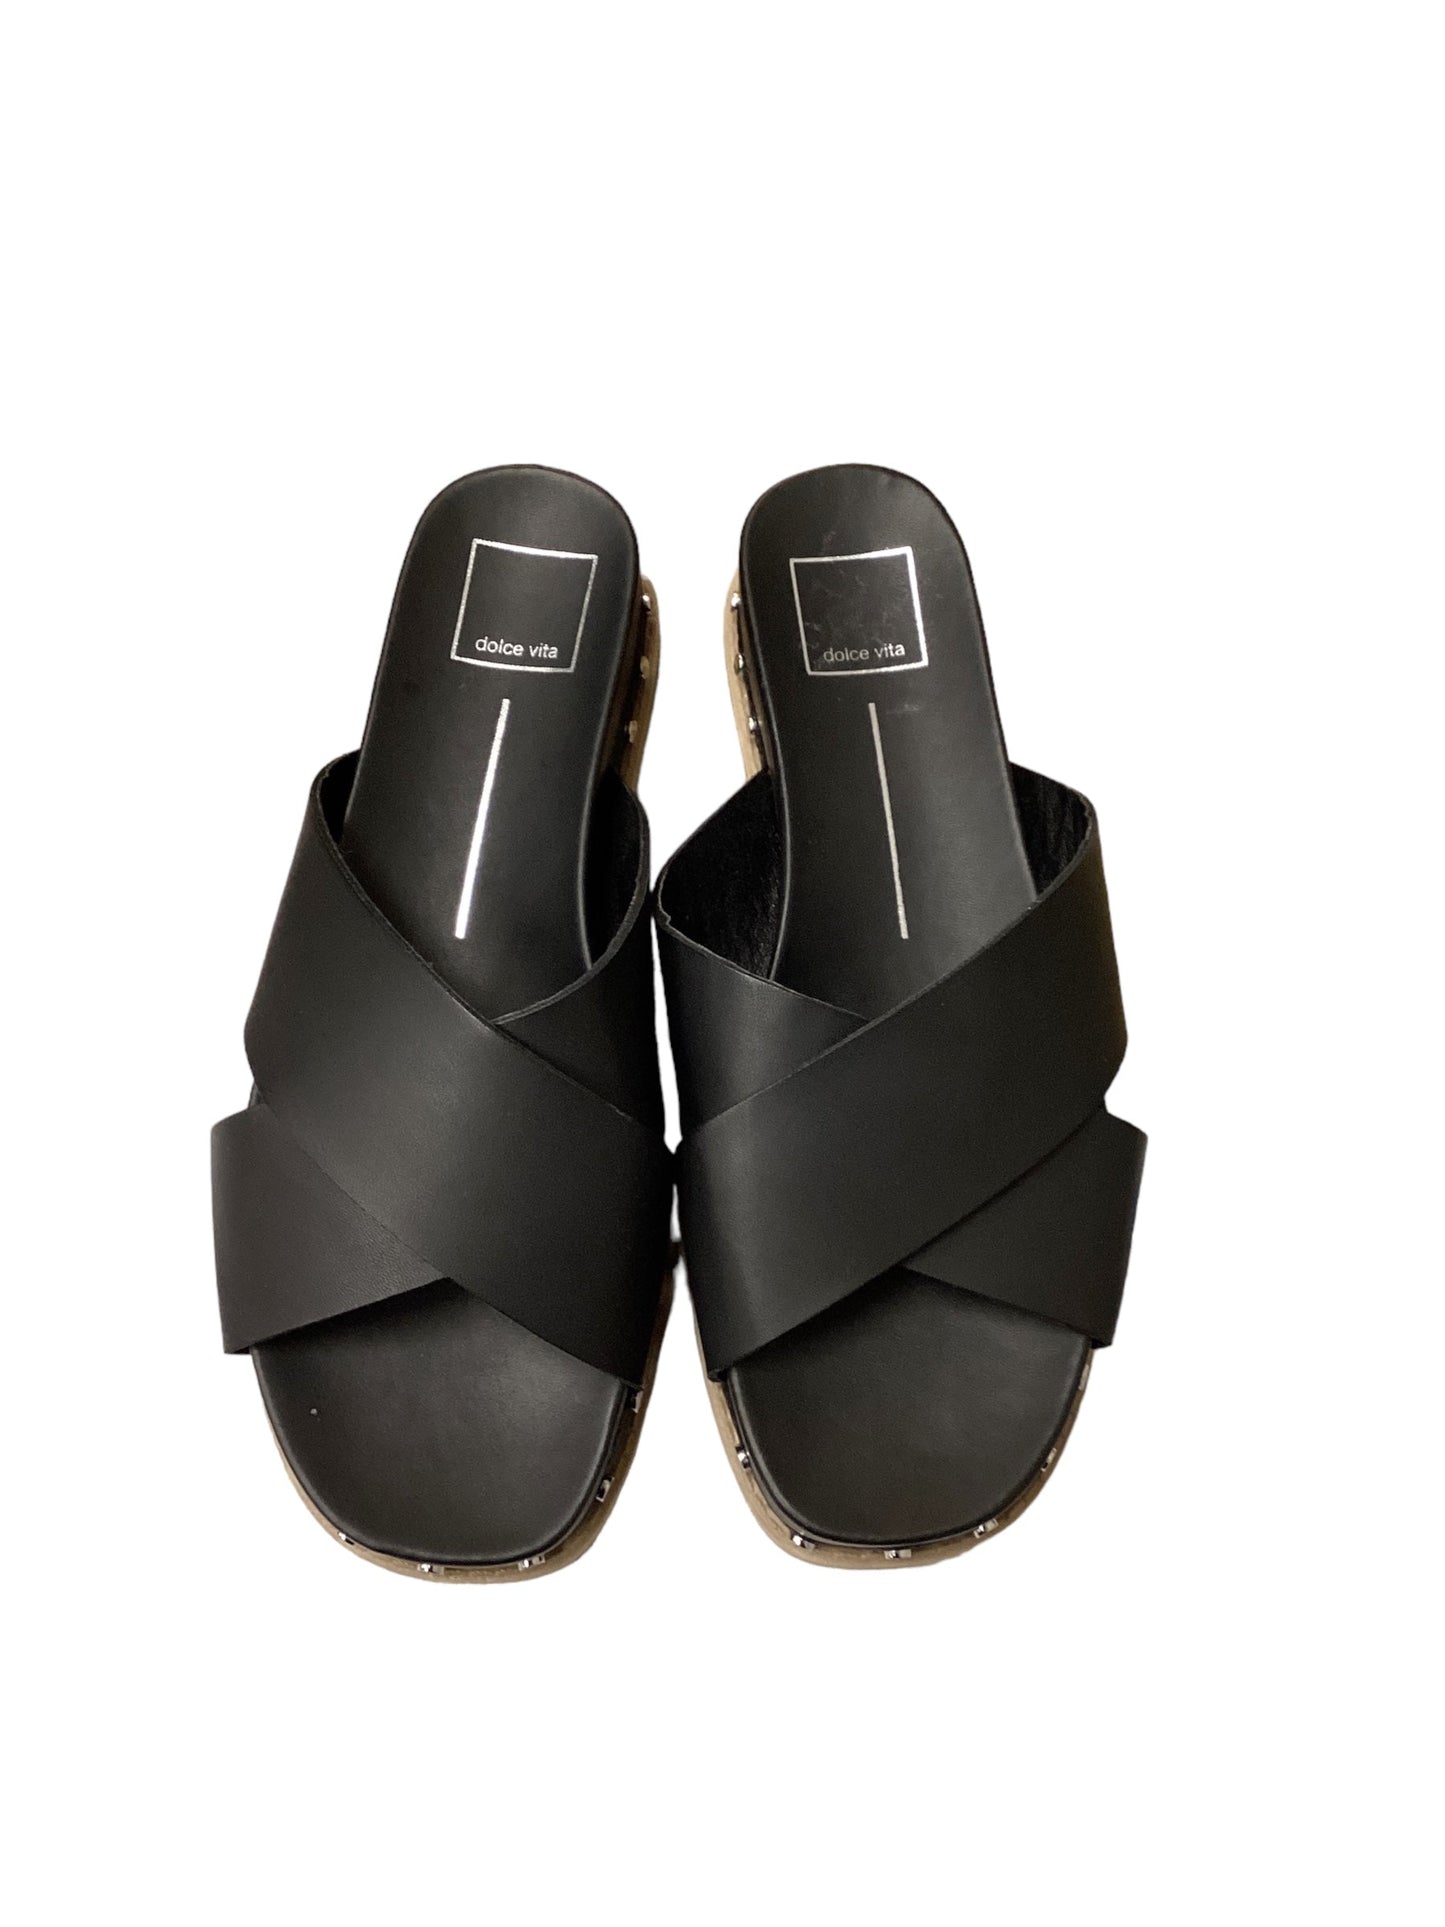 Black Sandals Flats Dolce Vita, Size 7.5